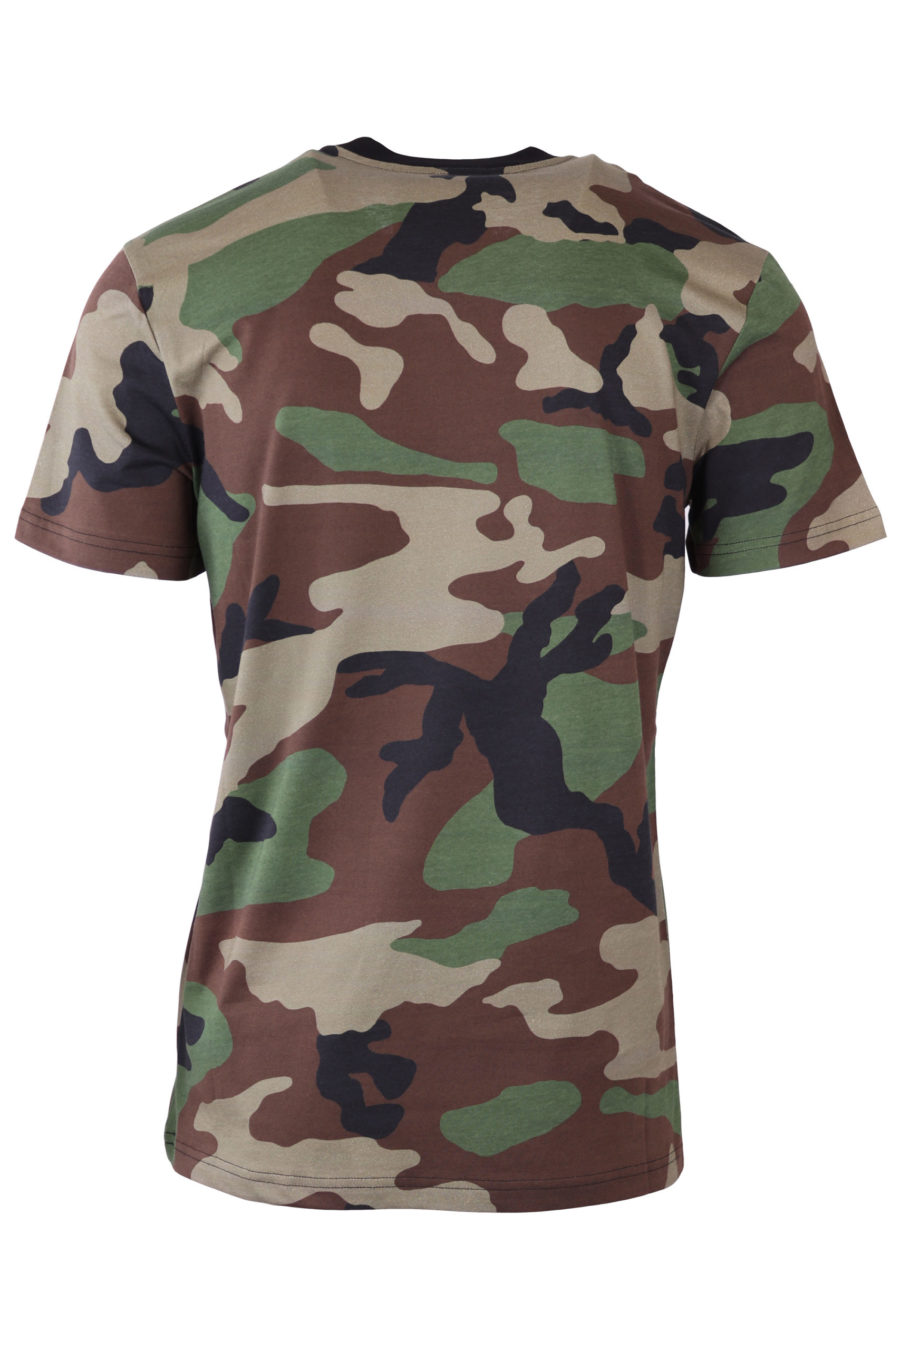 Camiseta Moschino Couture militar con logo - IMG 6540 scaled